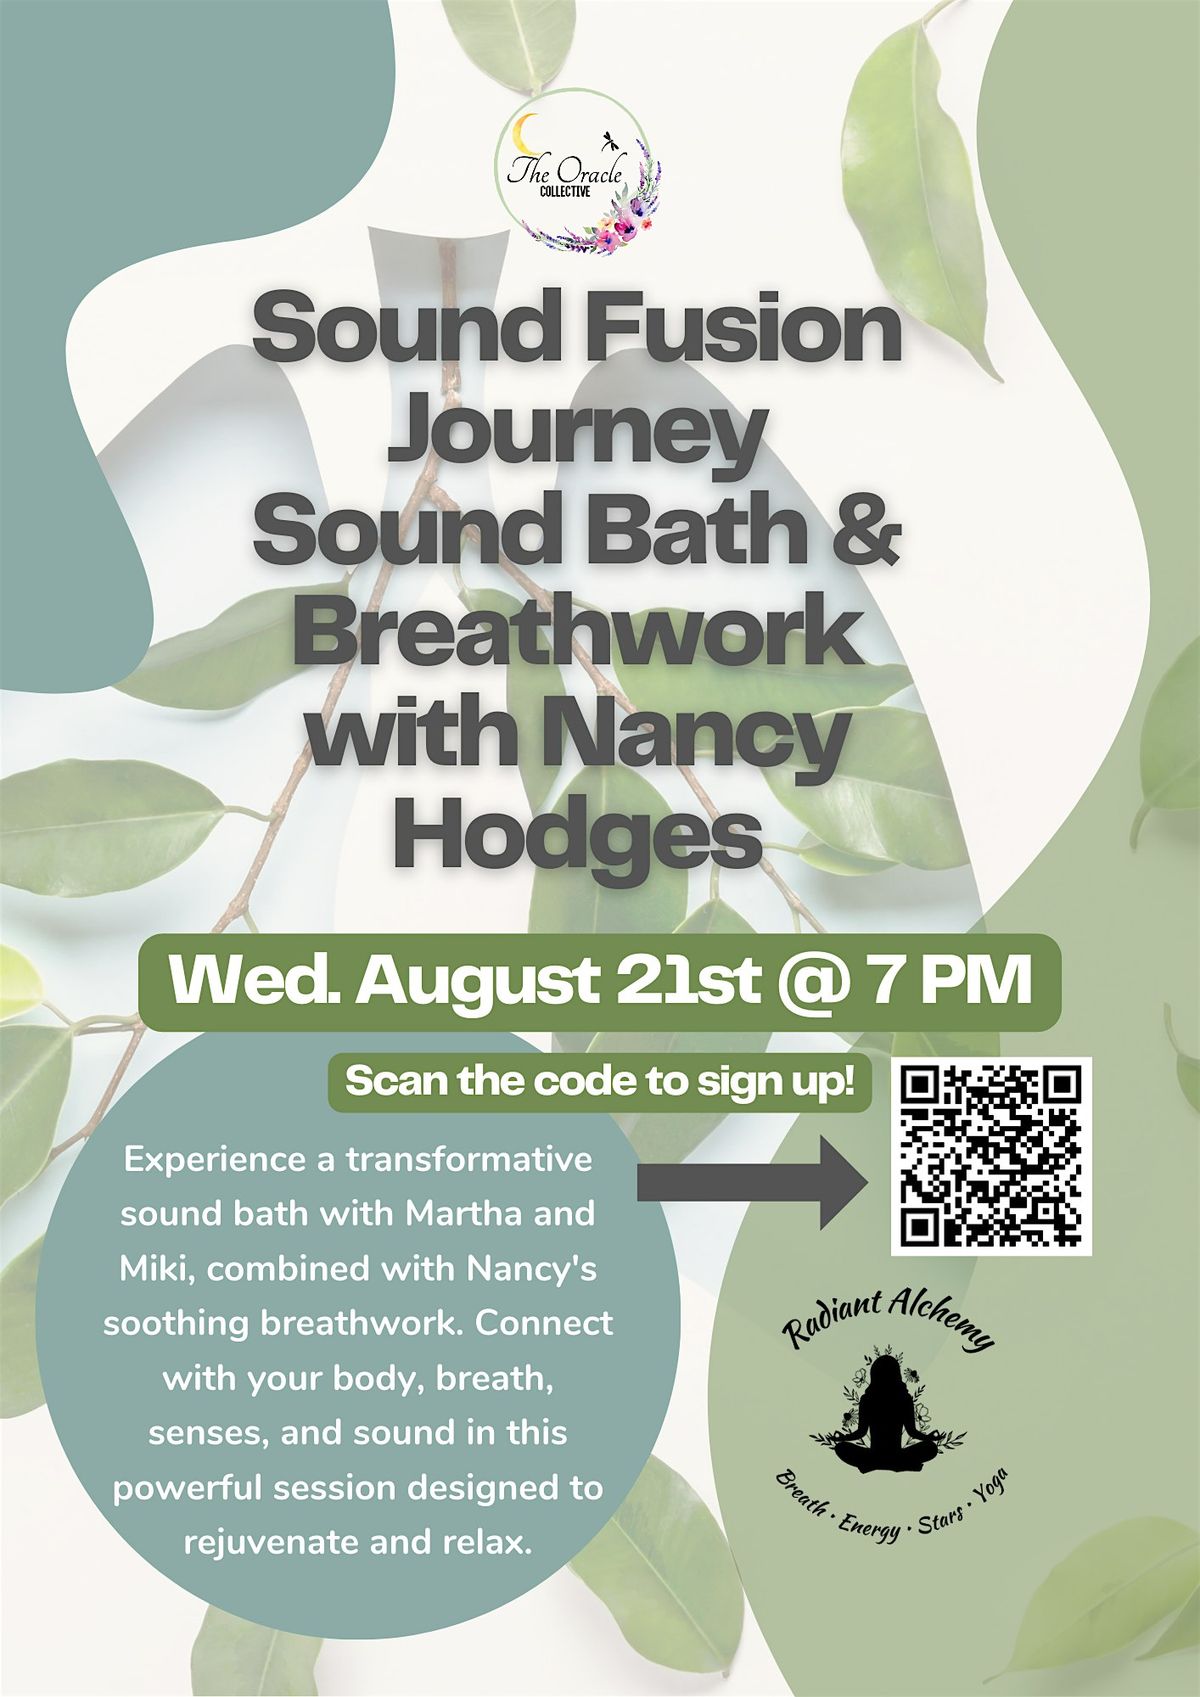 Sound Fusion Journey Sound Bath & Breathwork with Nancy Hodges